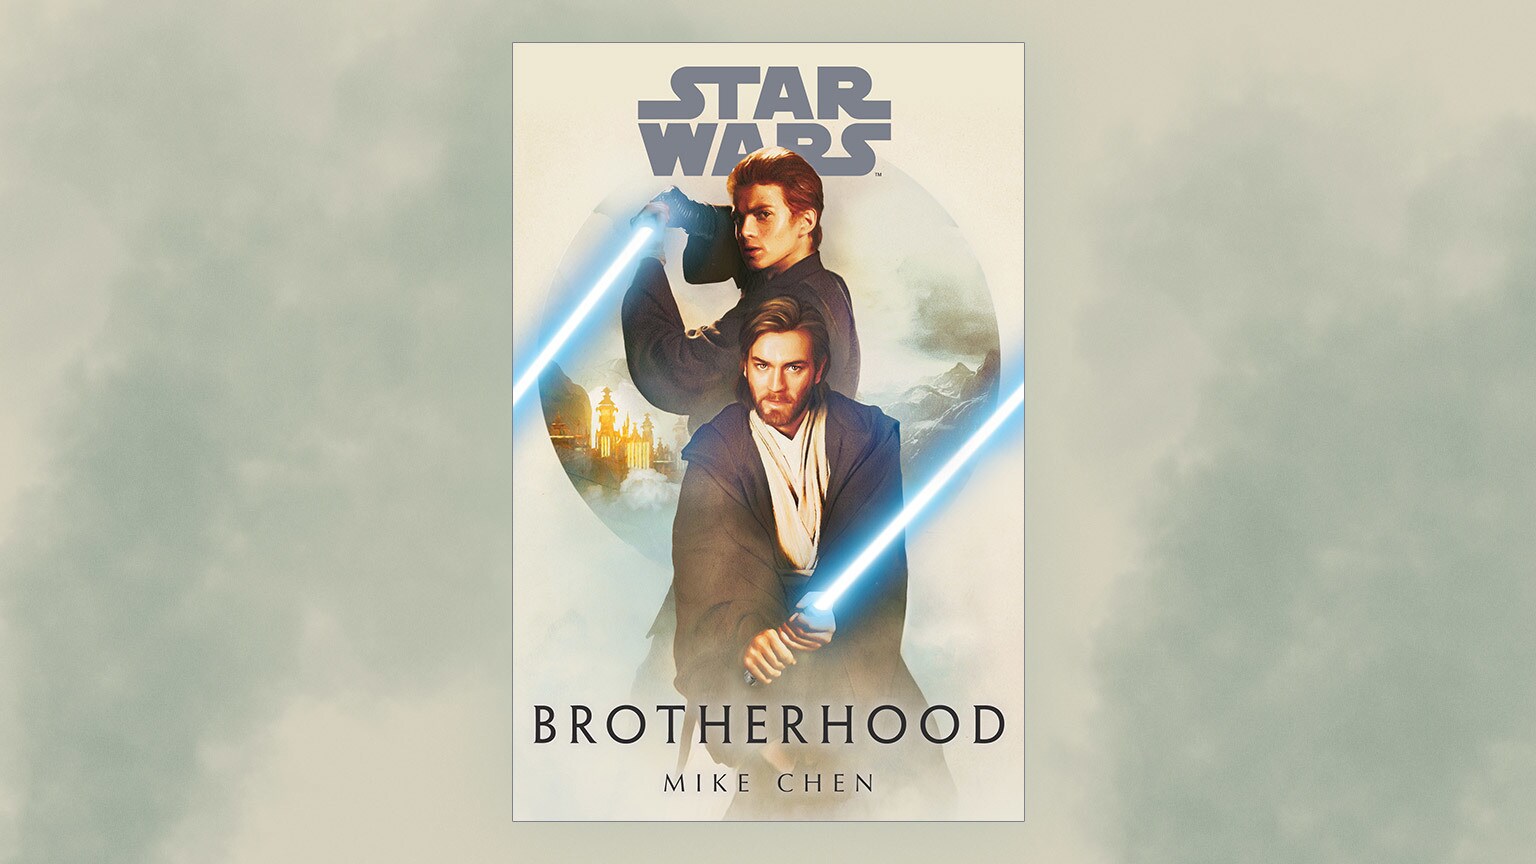 Obi-Wan Kenobi Meets Asajj Ventress in Star Wars: Brotherhood - Exclusive Excerpt